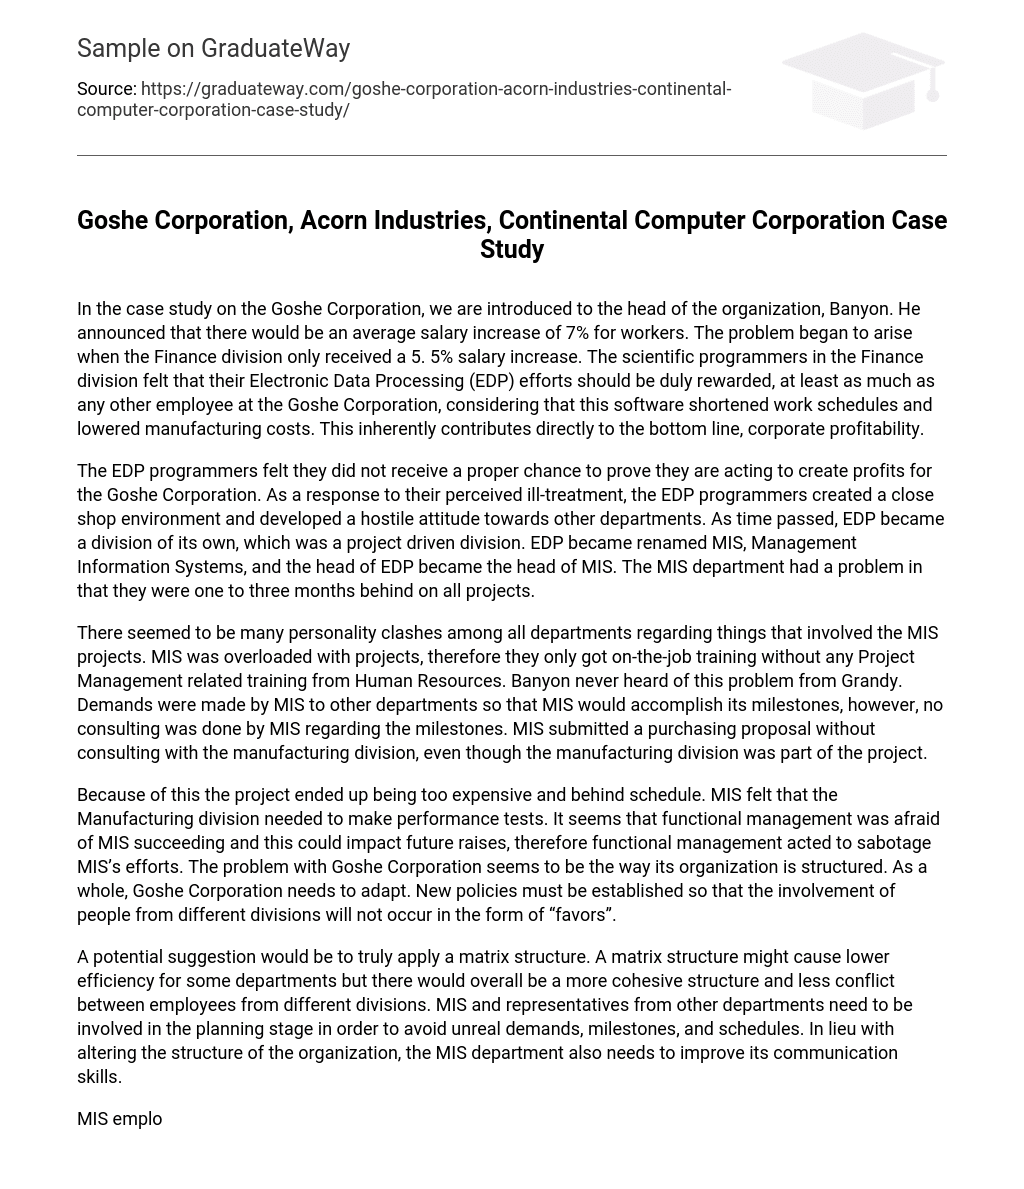 Goshe Corporation, Acorn Industries, Continental Computer Corporation Case Study